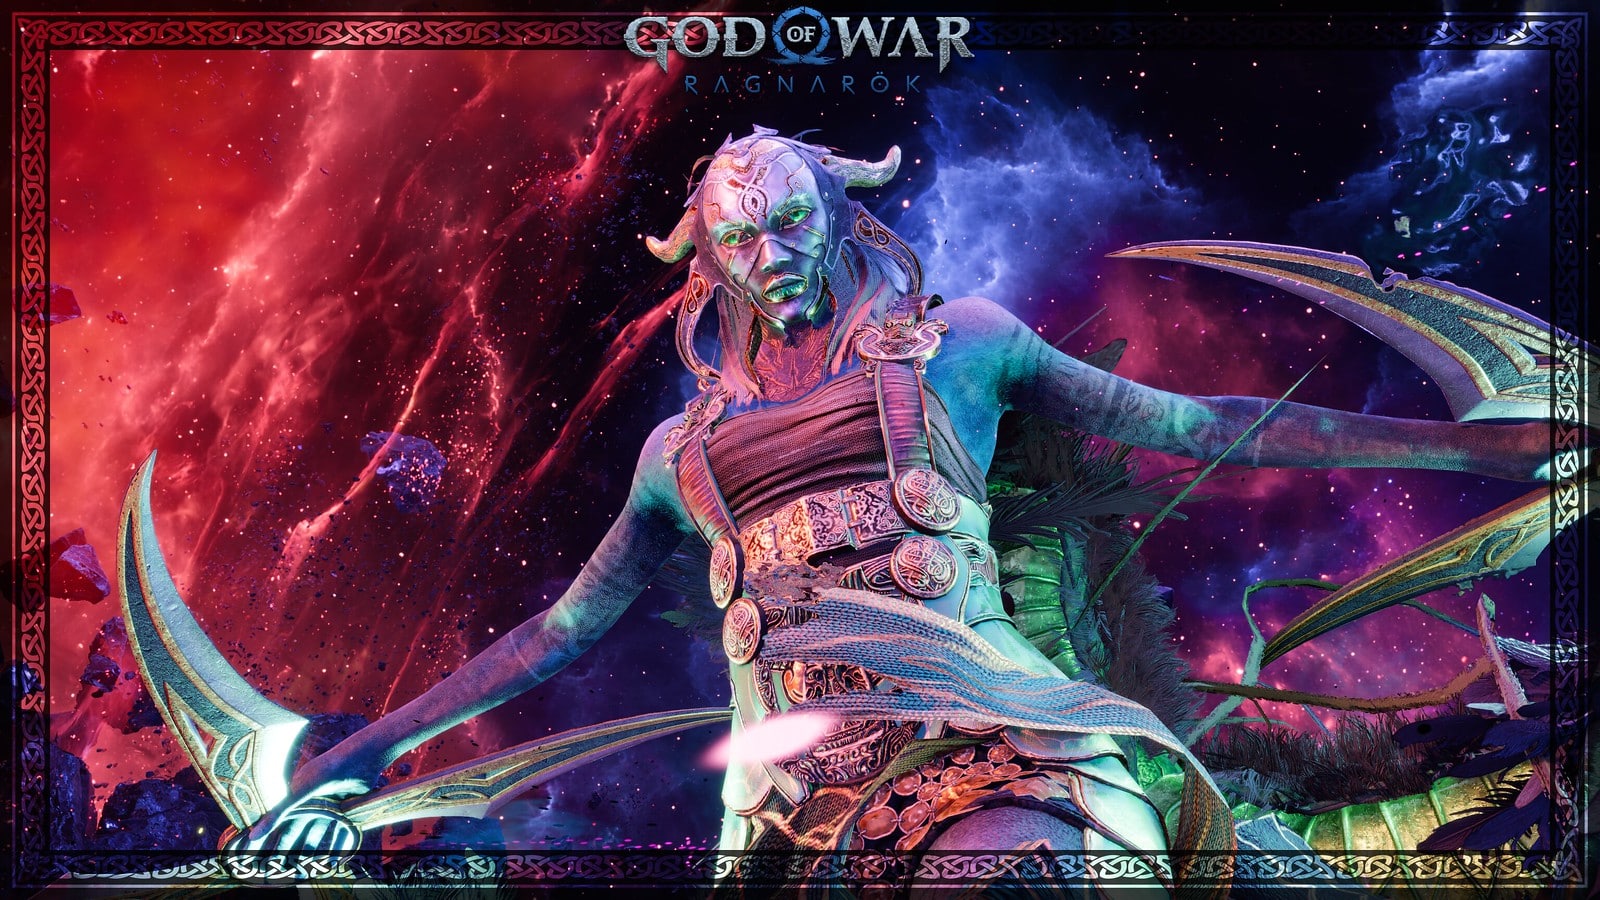 The DUMBEST God Of War Ragnarok reviews - Metacritic 